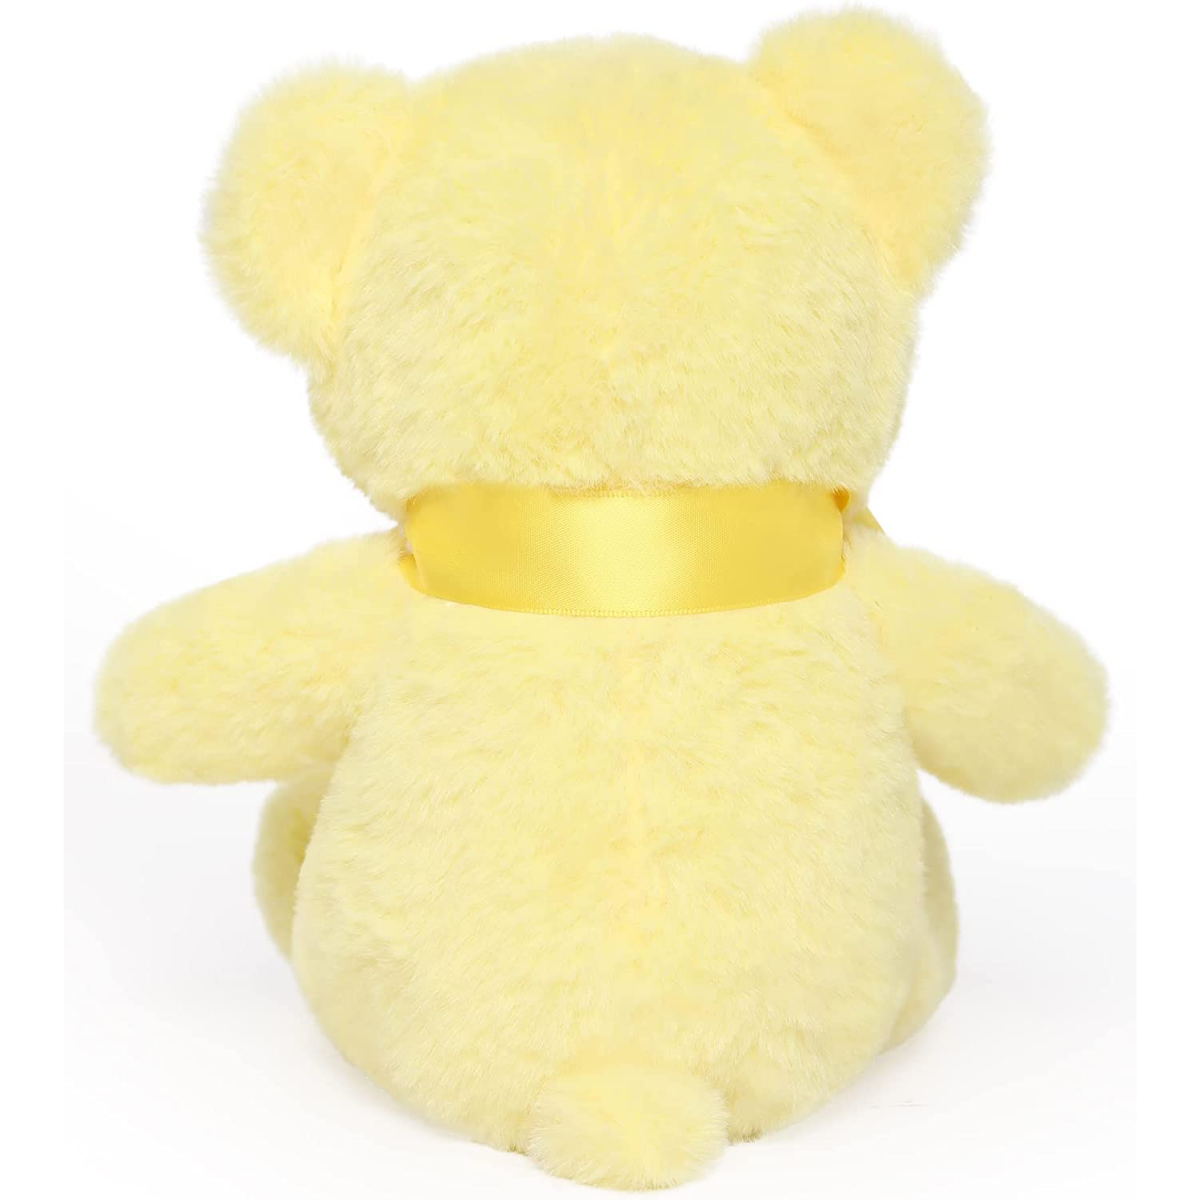 MorisMos 2-Pack Teddy Bear Plush Toy Set